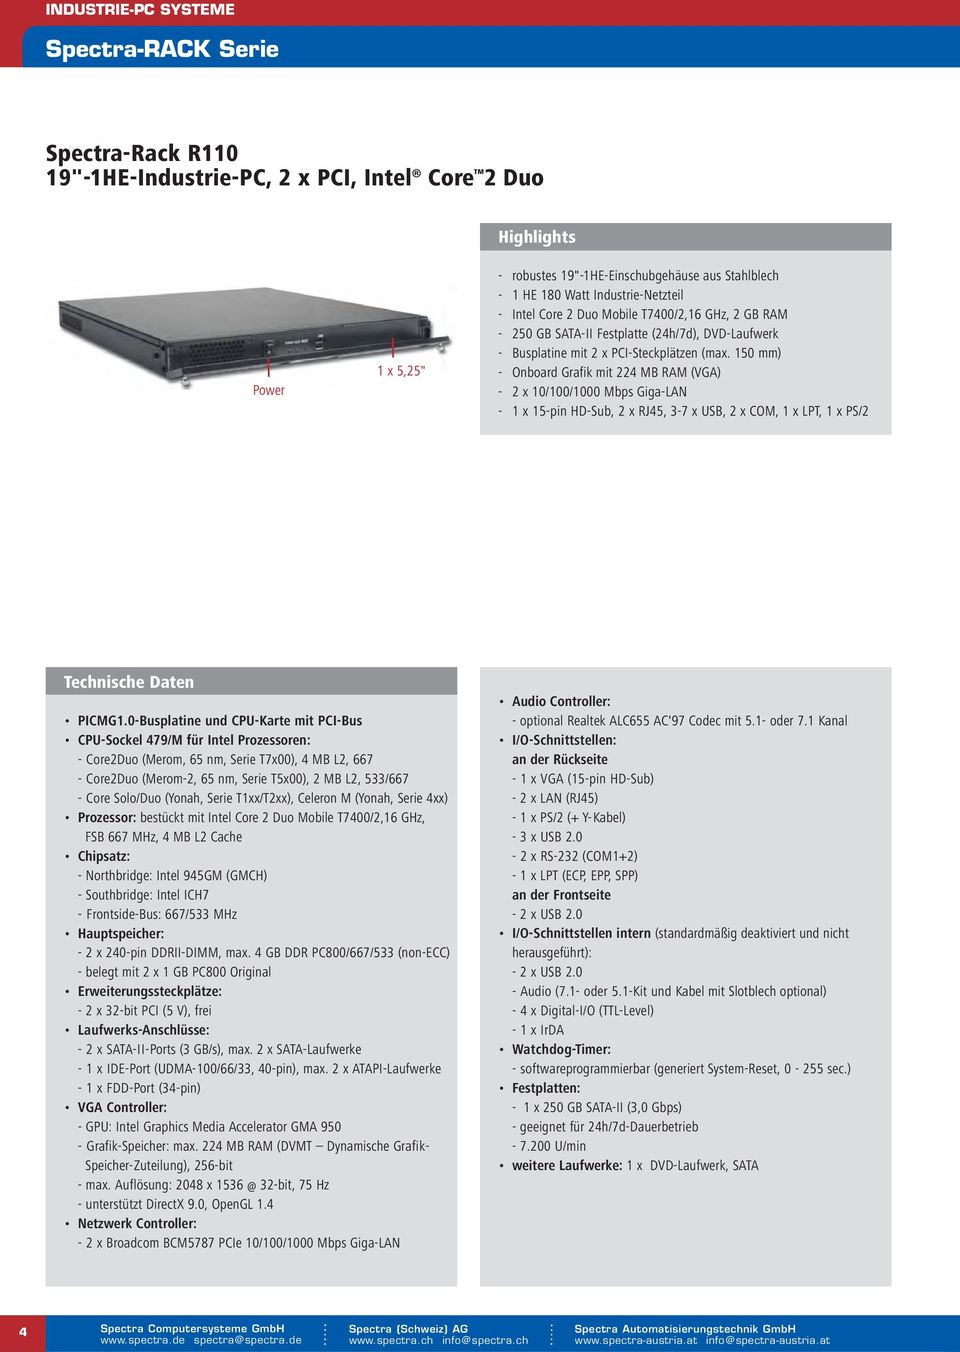 150 mm) - Onboard Grafik mit 224 MB RAM (VGA) - 2 x 10/100/1000 Mbps Giga-LAN - 1 x 15-pin HD-Sub, 2 x RJ45, 3-7 x USB, 2 x COM, 1 x LPT, 1 x PS/2 Technische Daten PICMG1.